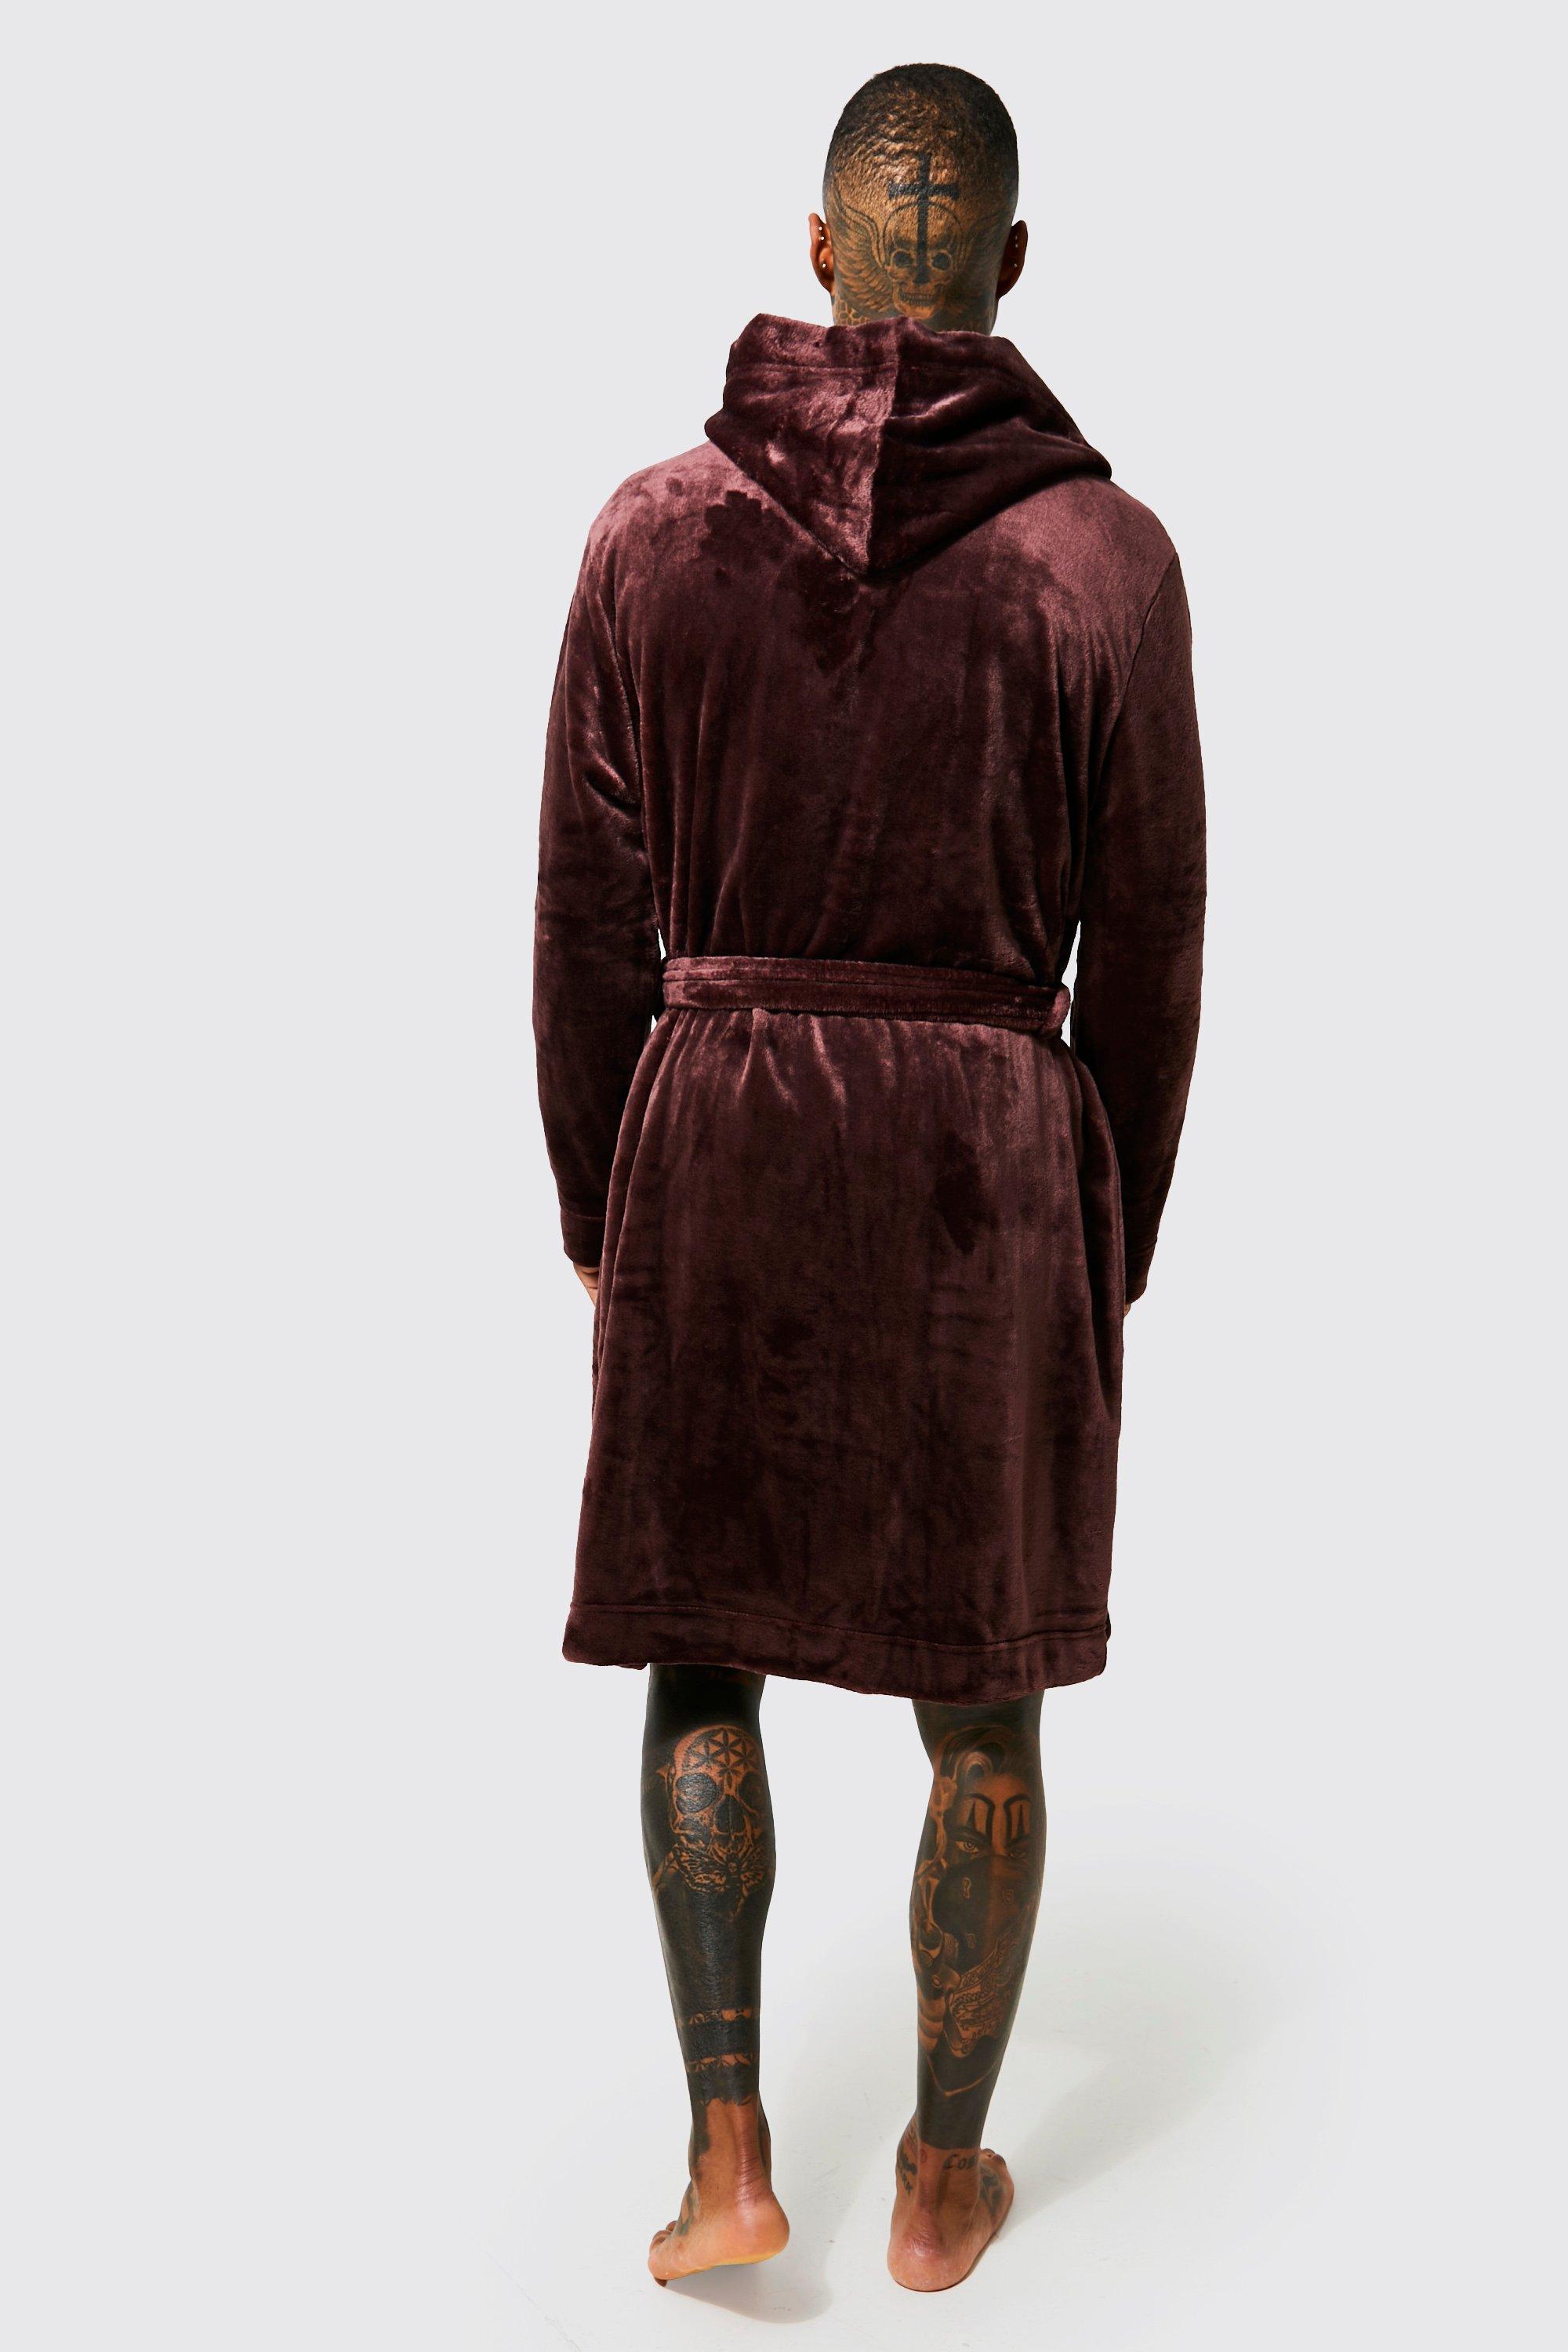 Boohoo Hooded Bathrobe/robe in Chocolate for Men robe dresses and bathrobes Brown Womens Clothing Nightwear and sleepwear Robes 